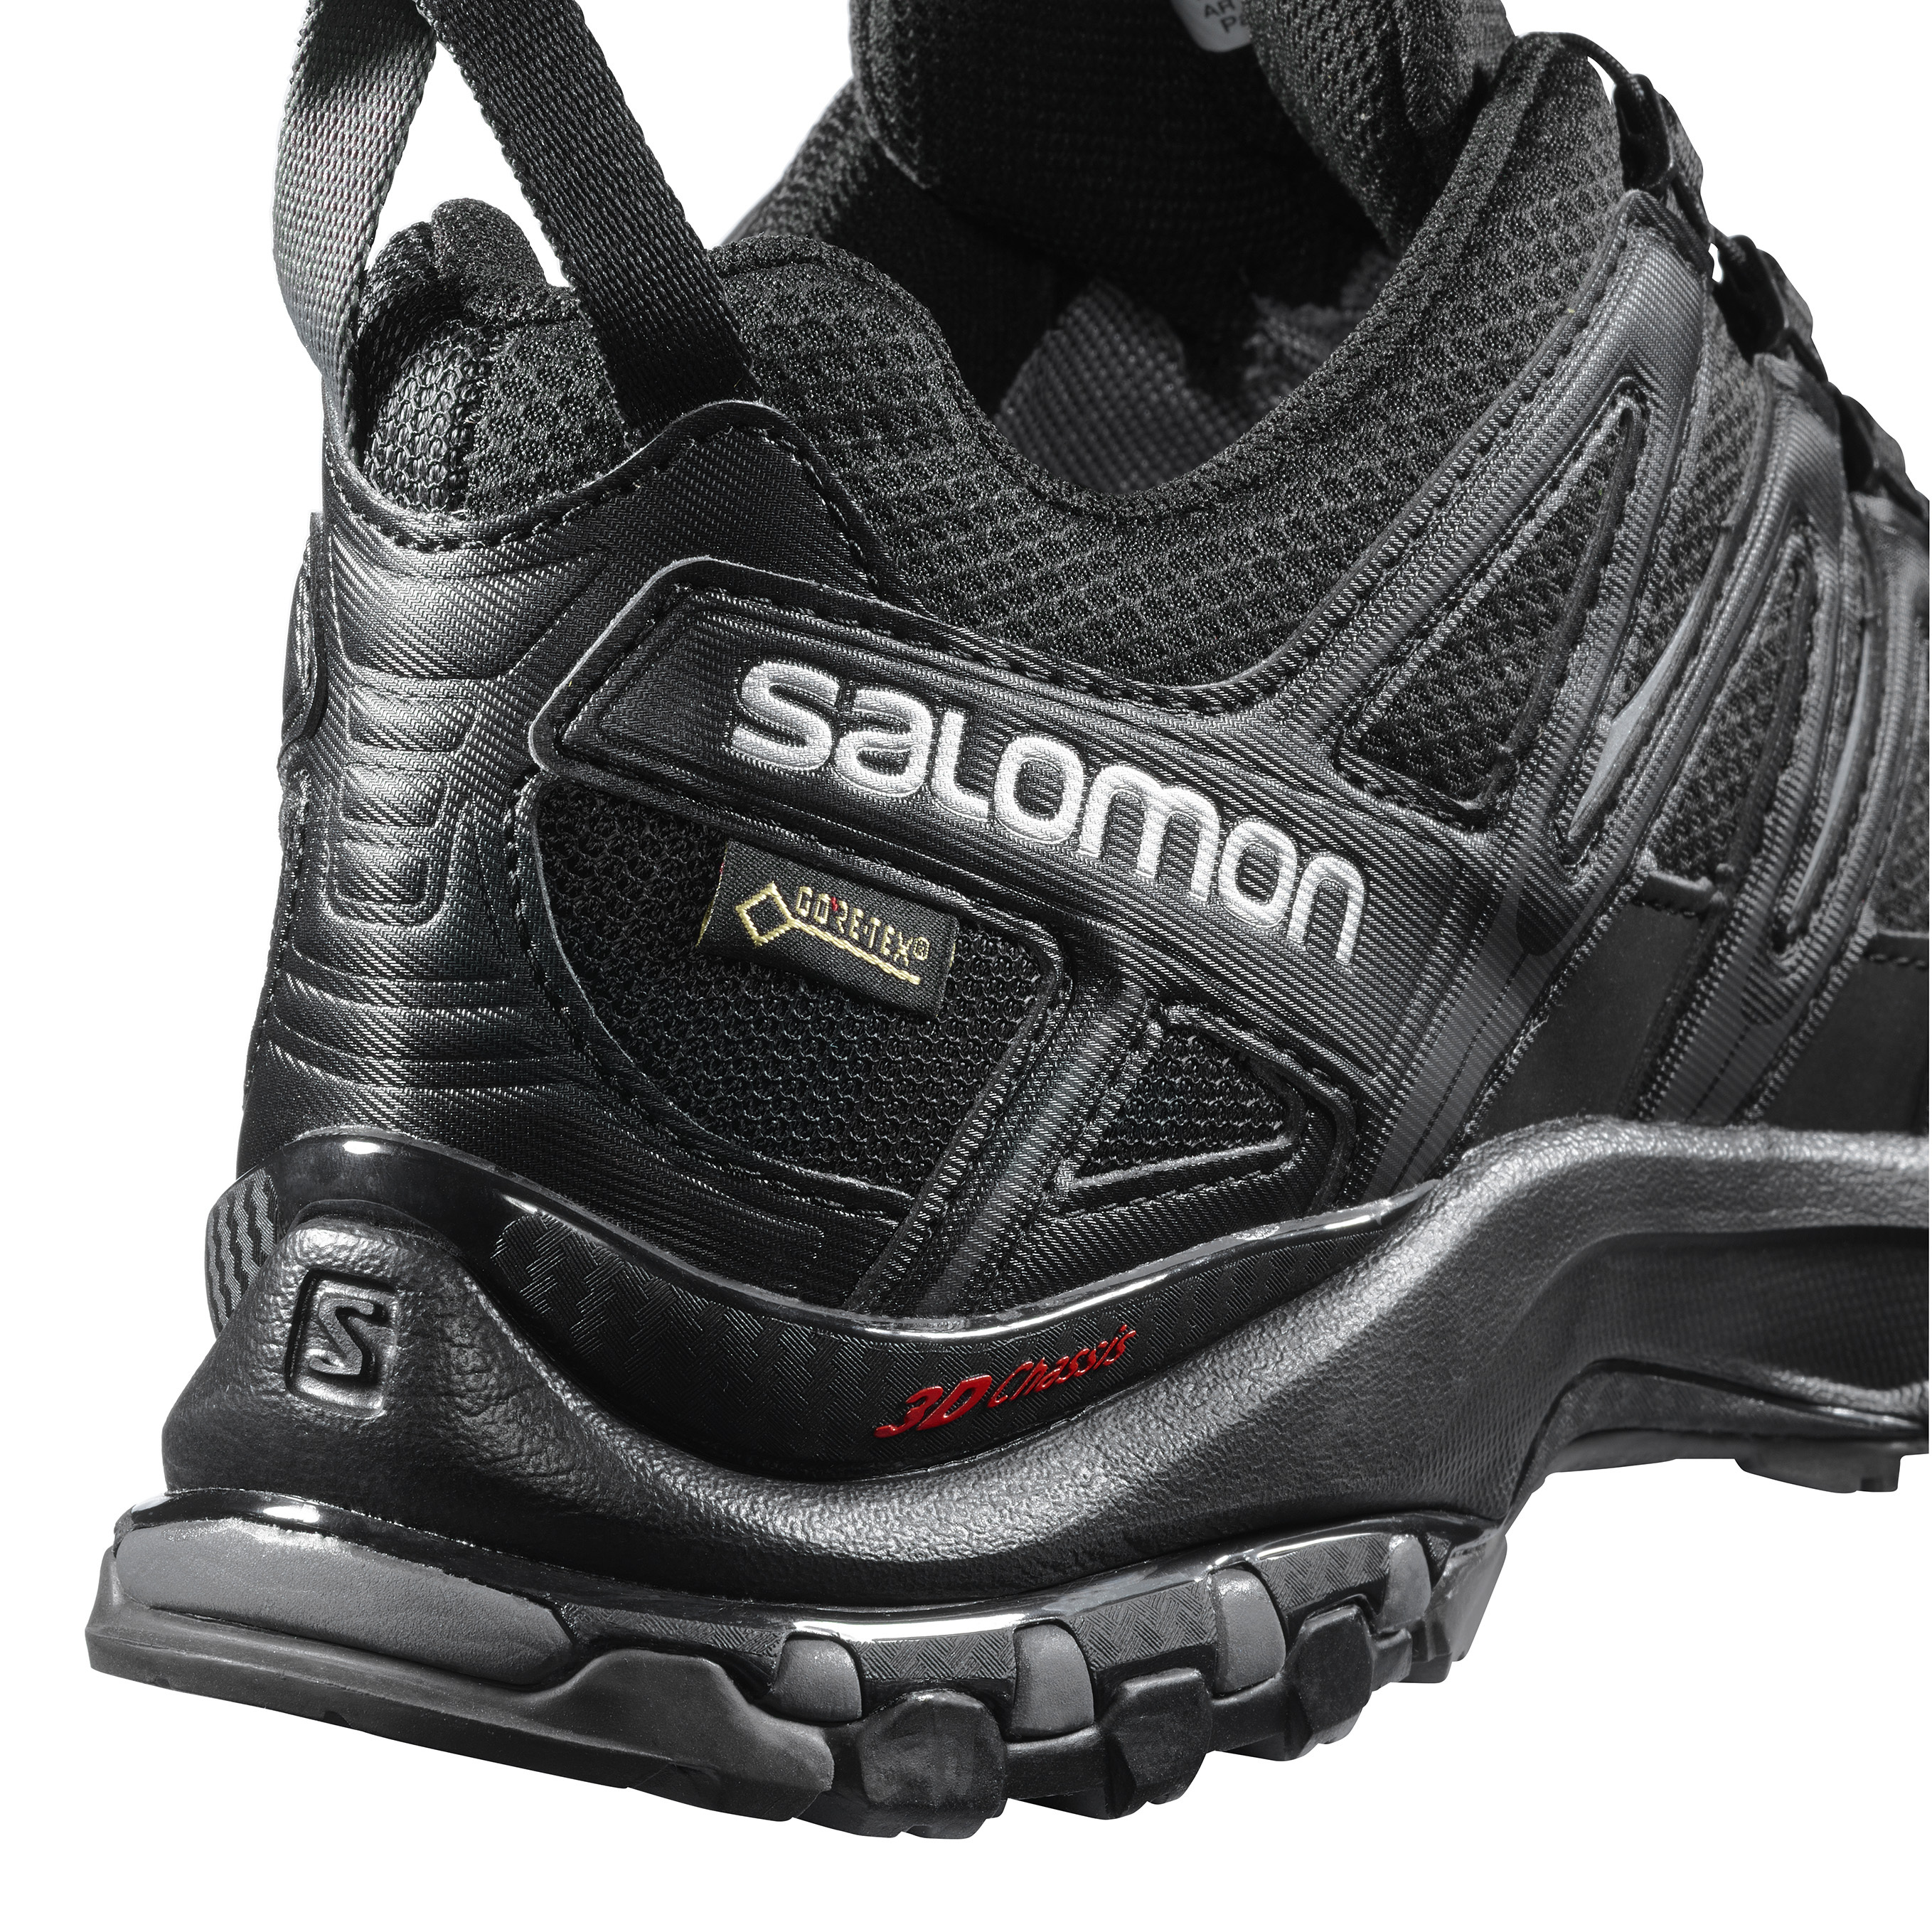 Кроссовки xa pro. Salomon xa Pro 3d GTX. Salomon xa Pro 3d GTX Black. Salomon xa Pro 3. Кроссовки Саломон xa Pro 3d GTX.